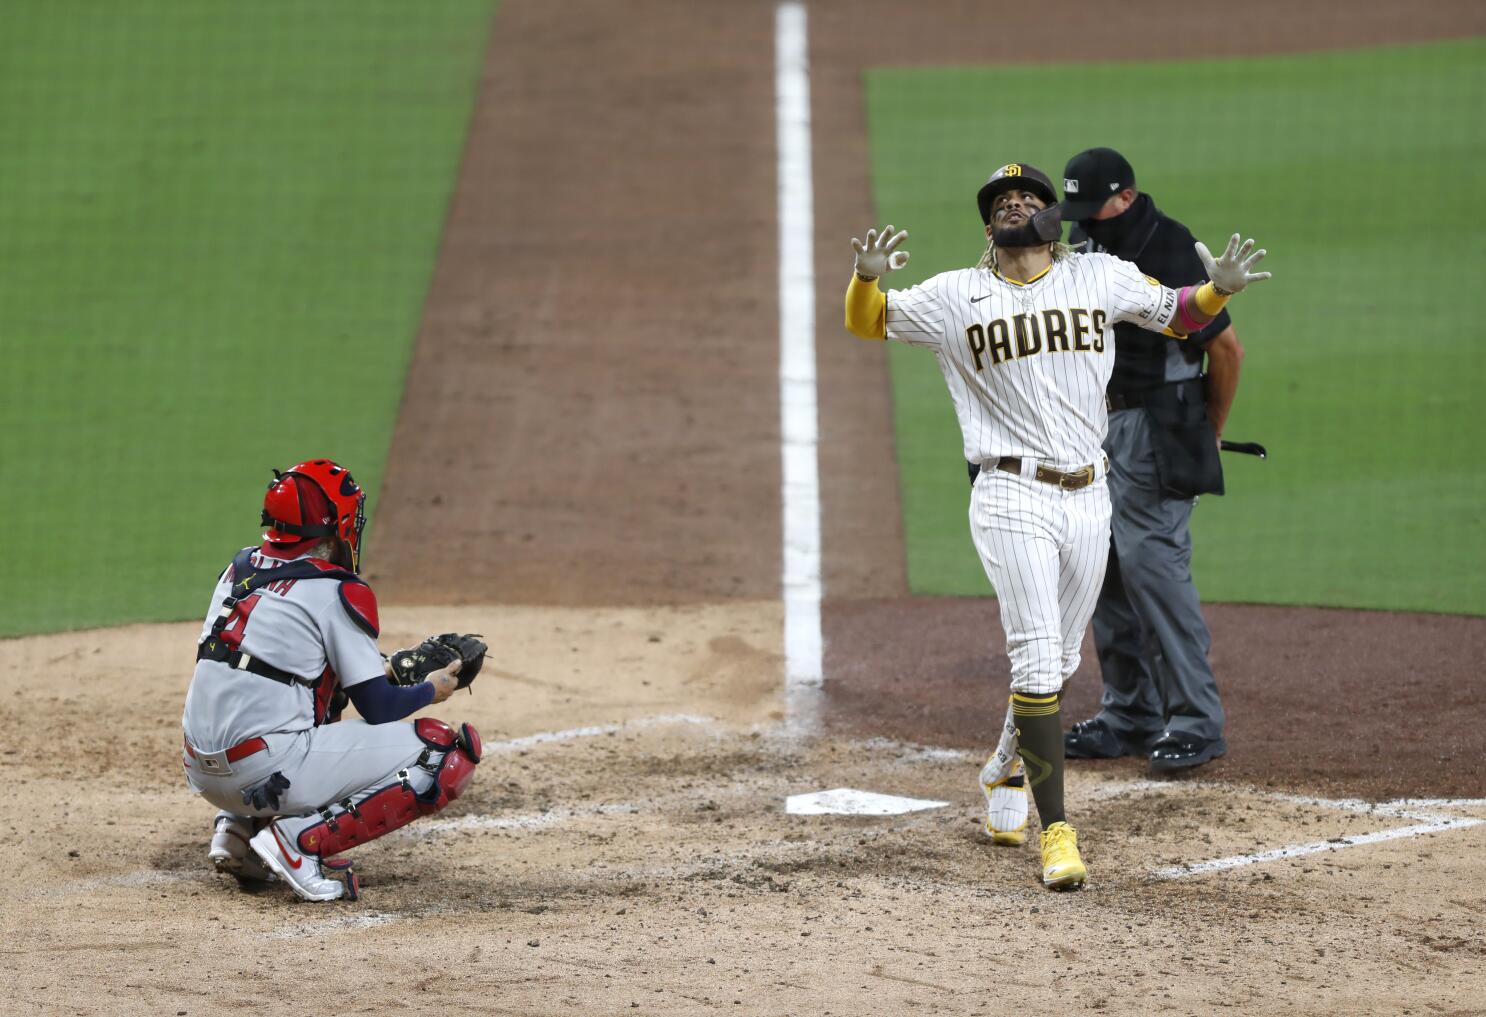 Padres star Fernando Tatis Jr. to remain at shortstop